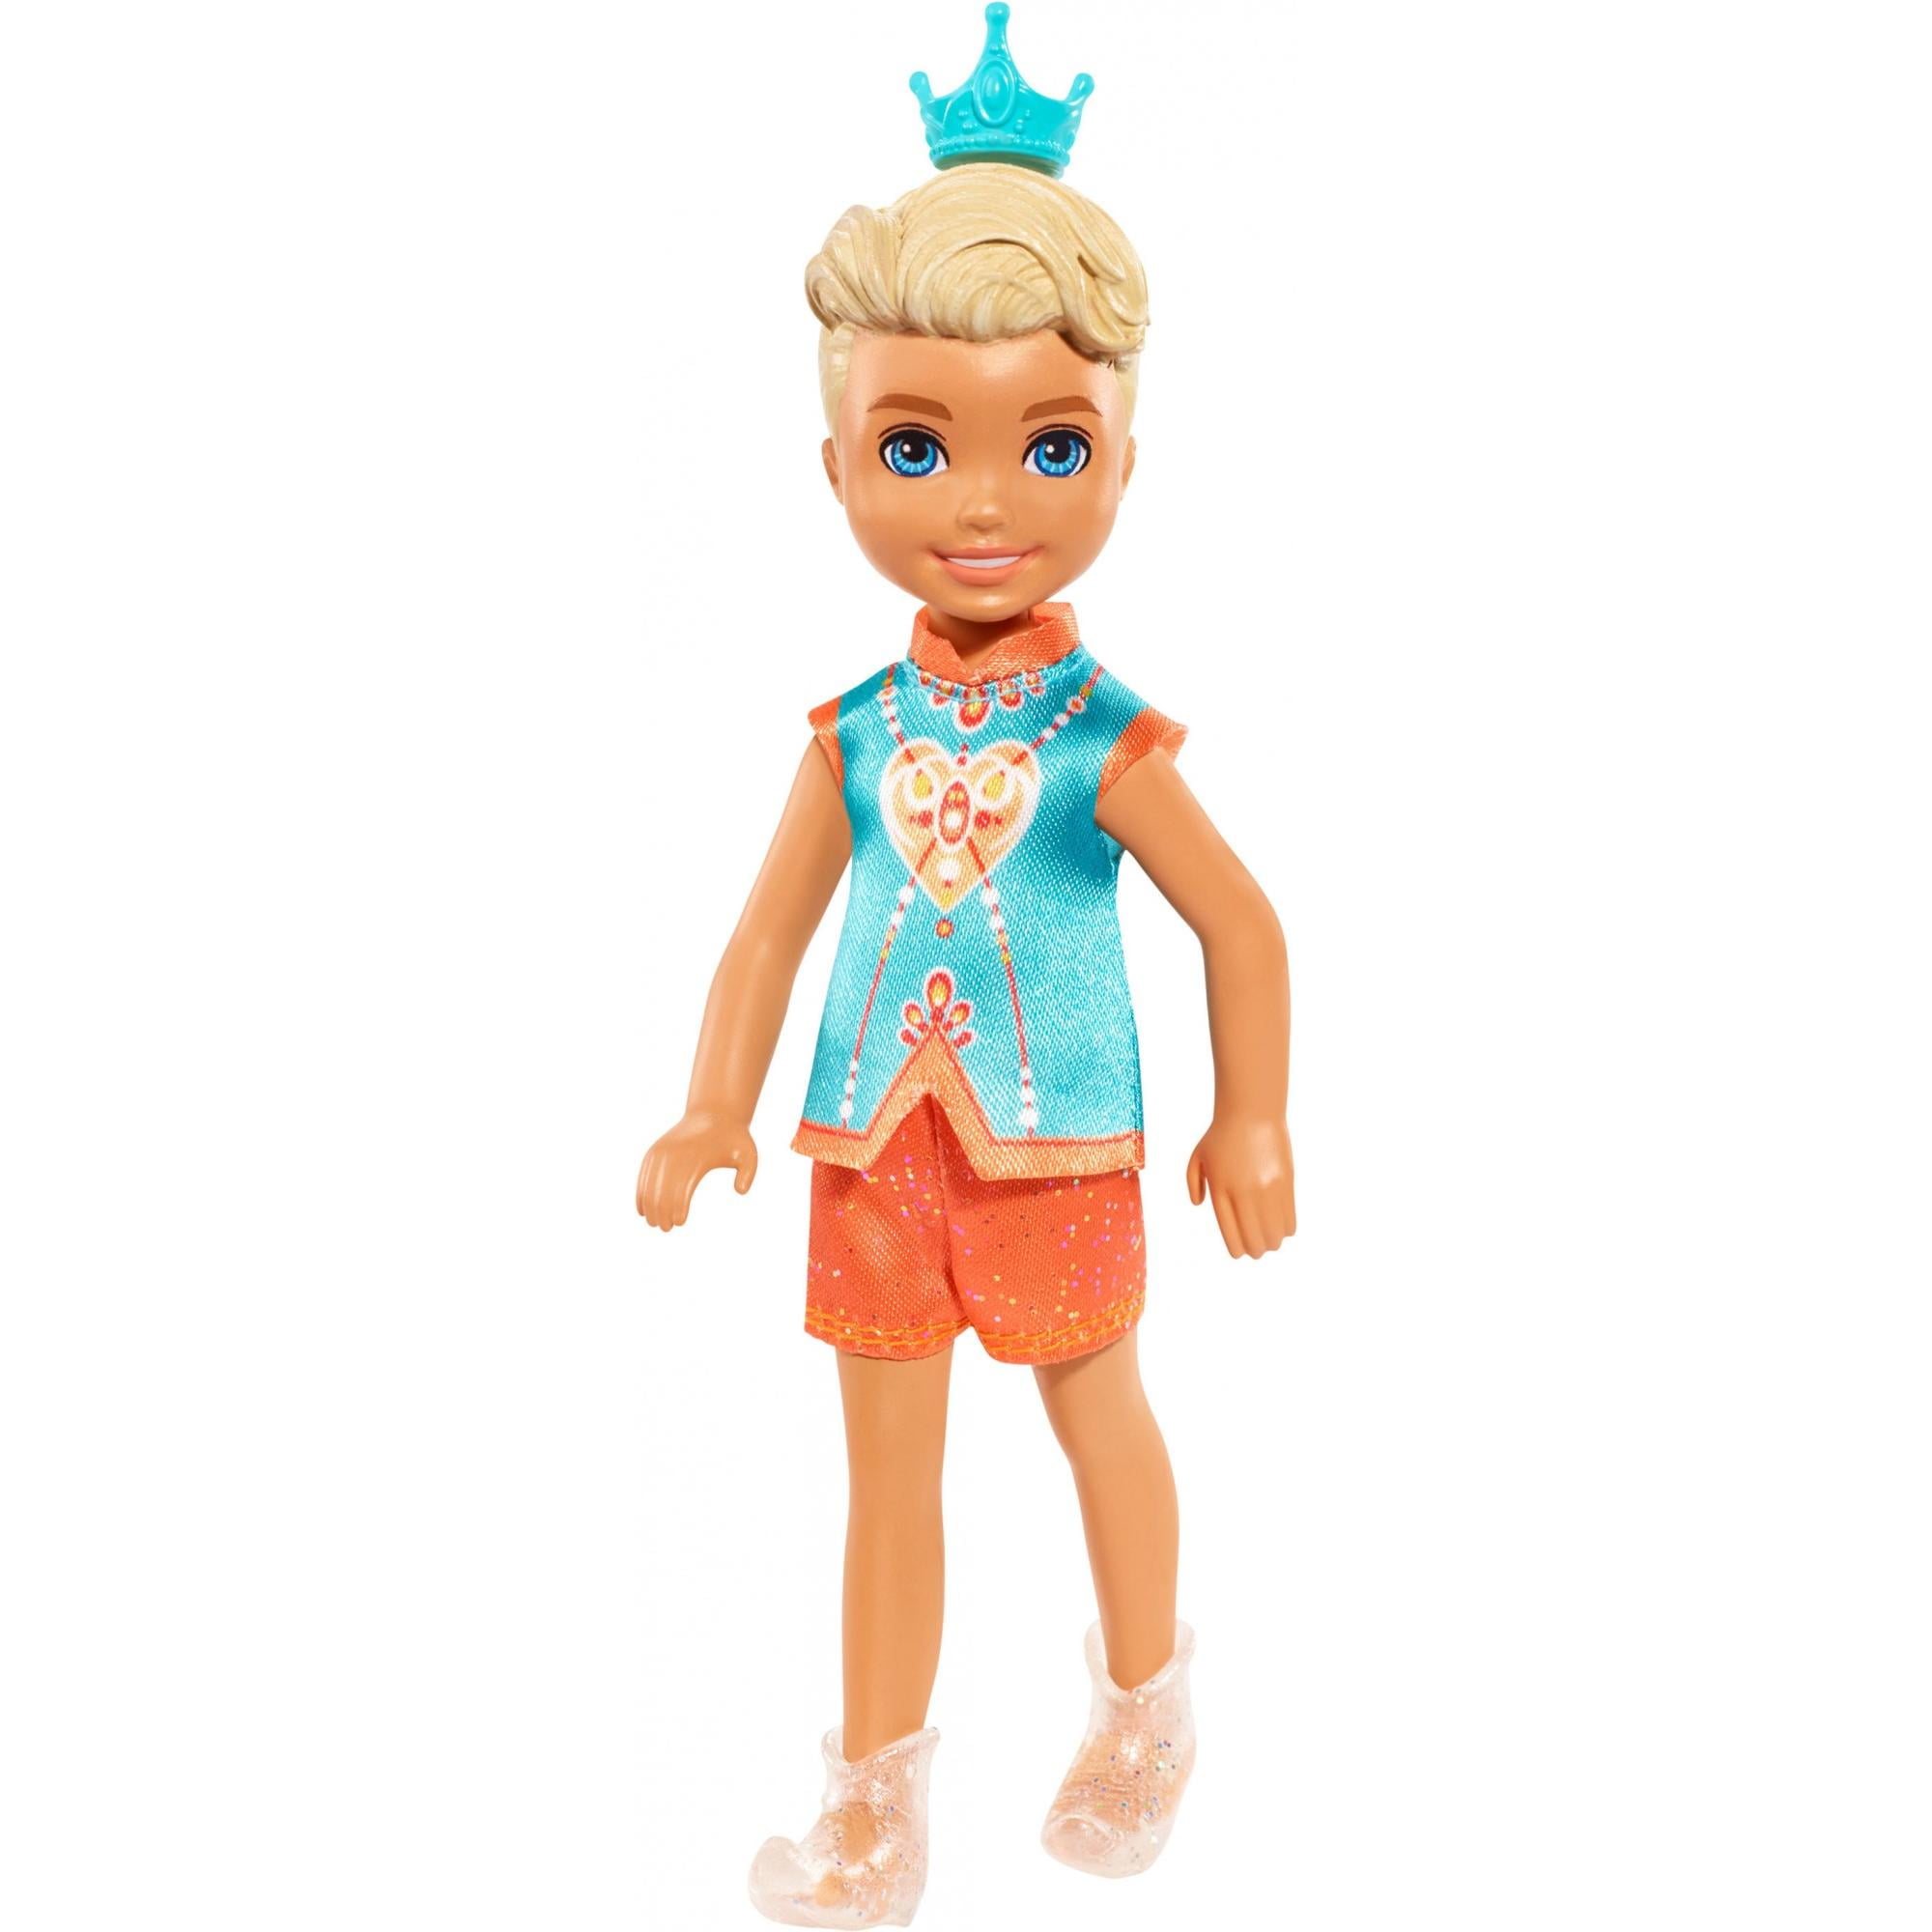 Bright Blue Hair Bb4 for sale online Barbie Dreamtopia Chelsea Sprite Doll 